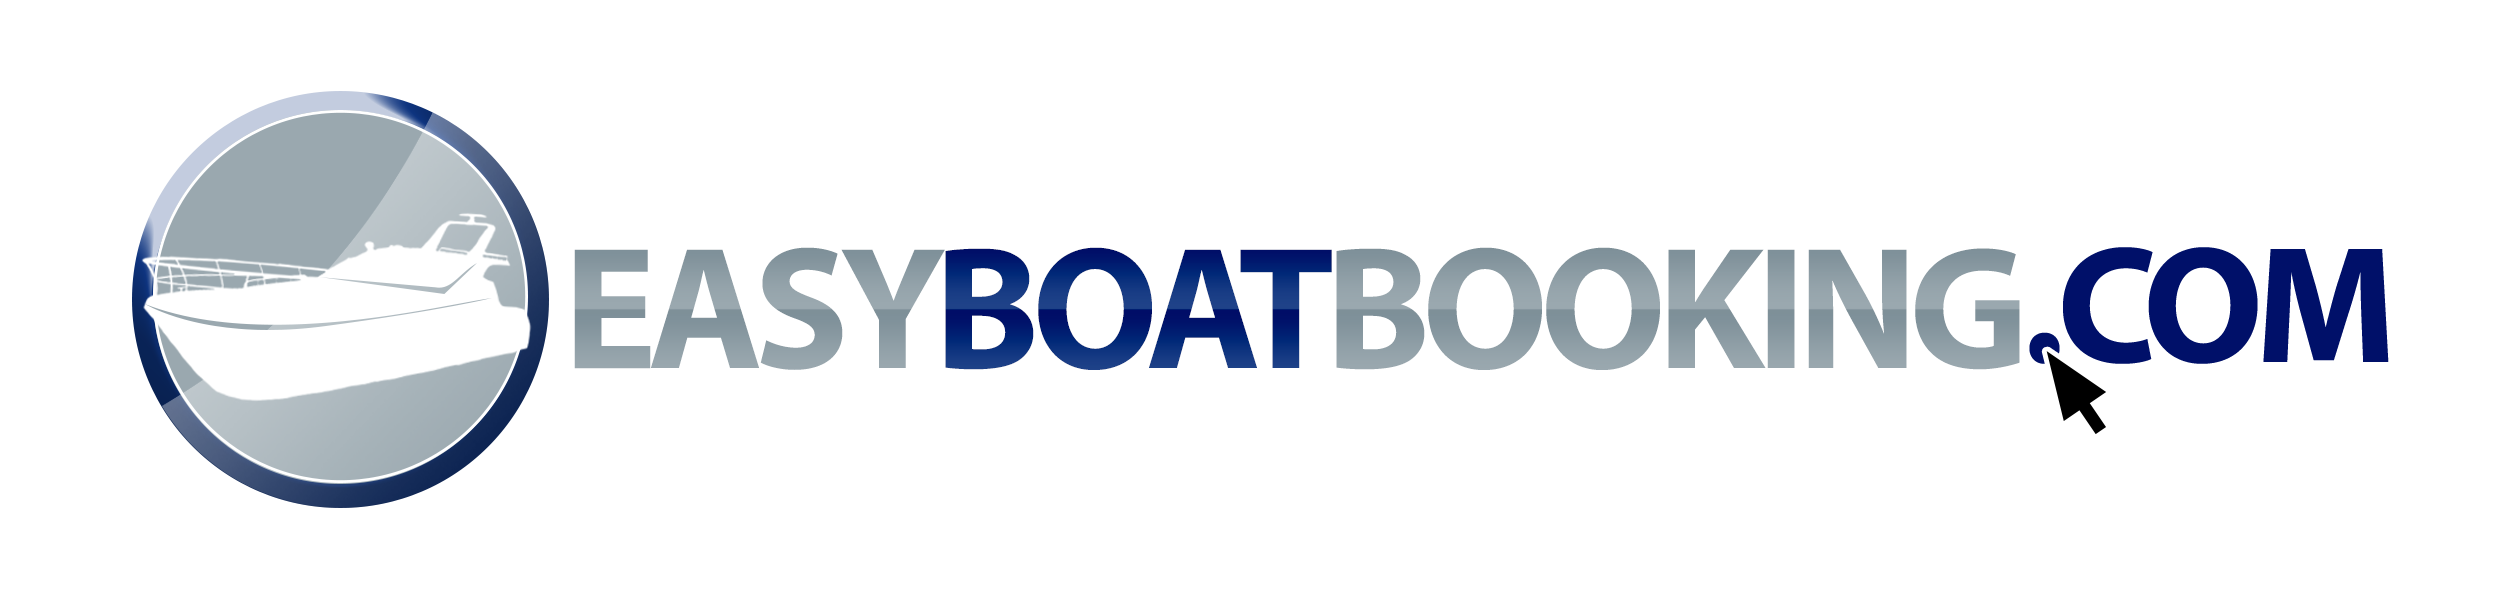 Einfache Bootsbuchung